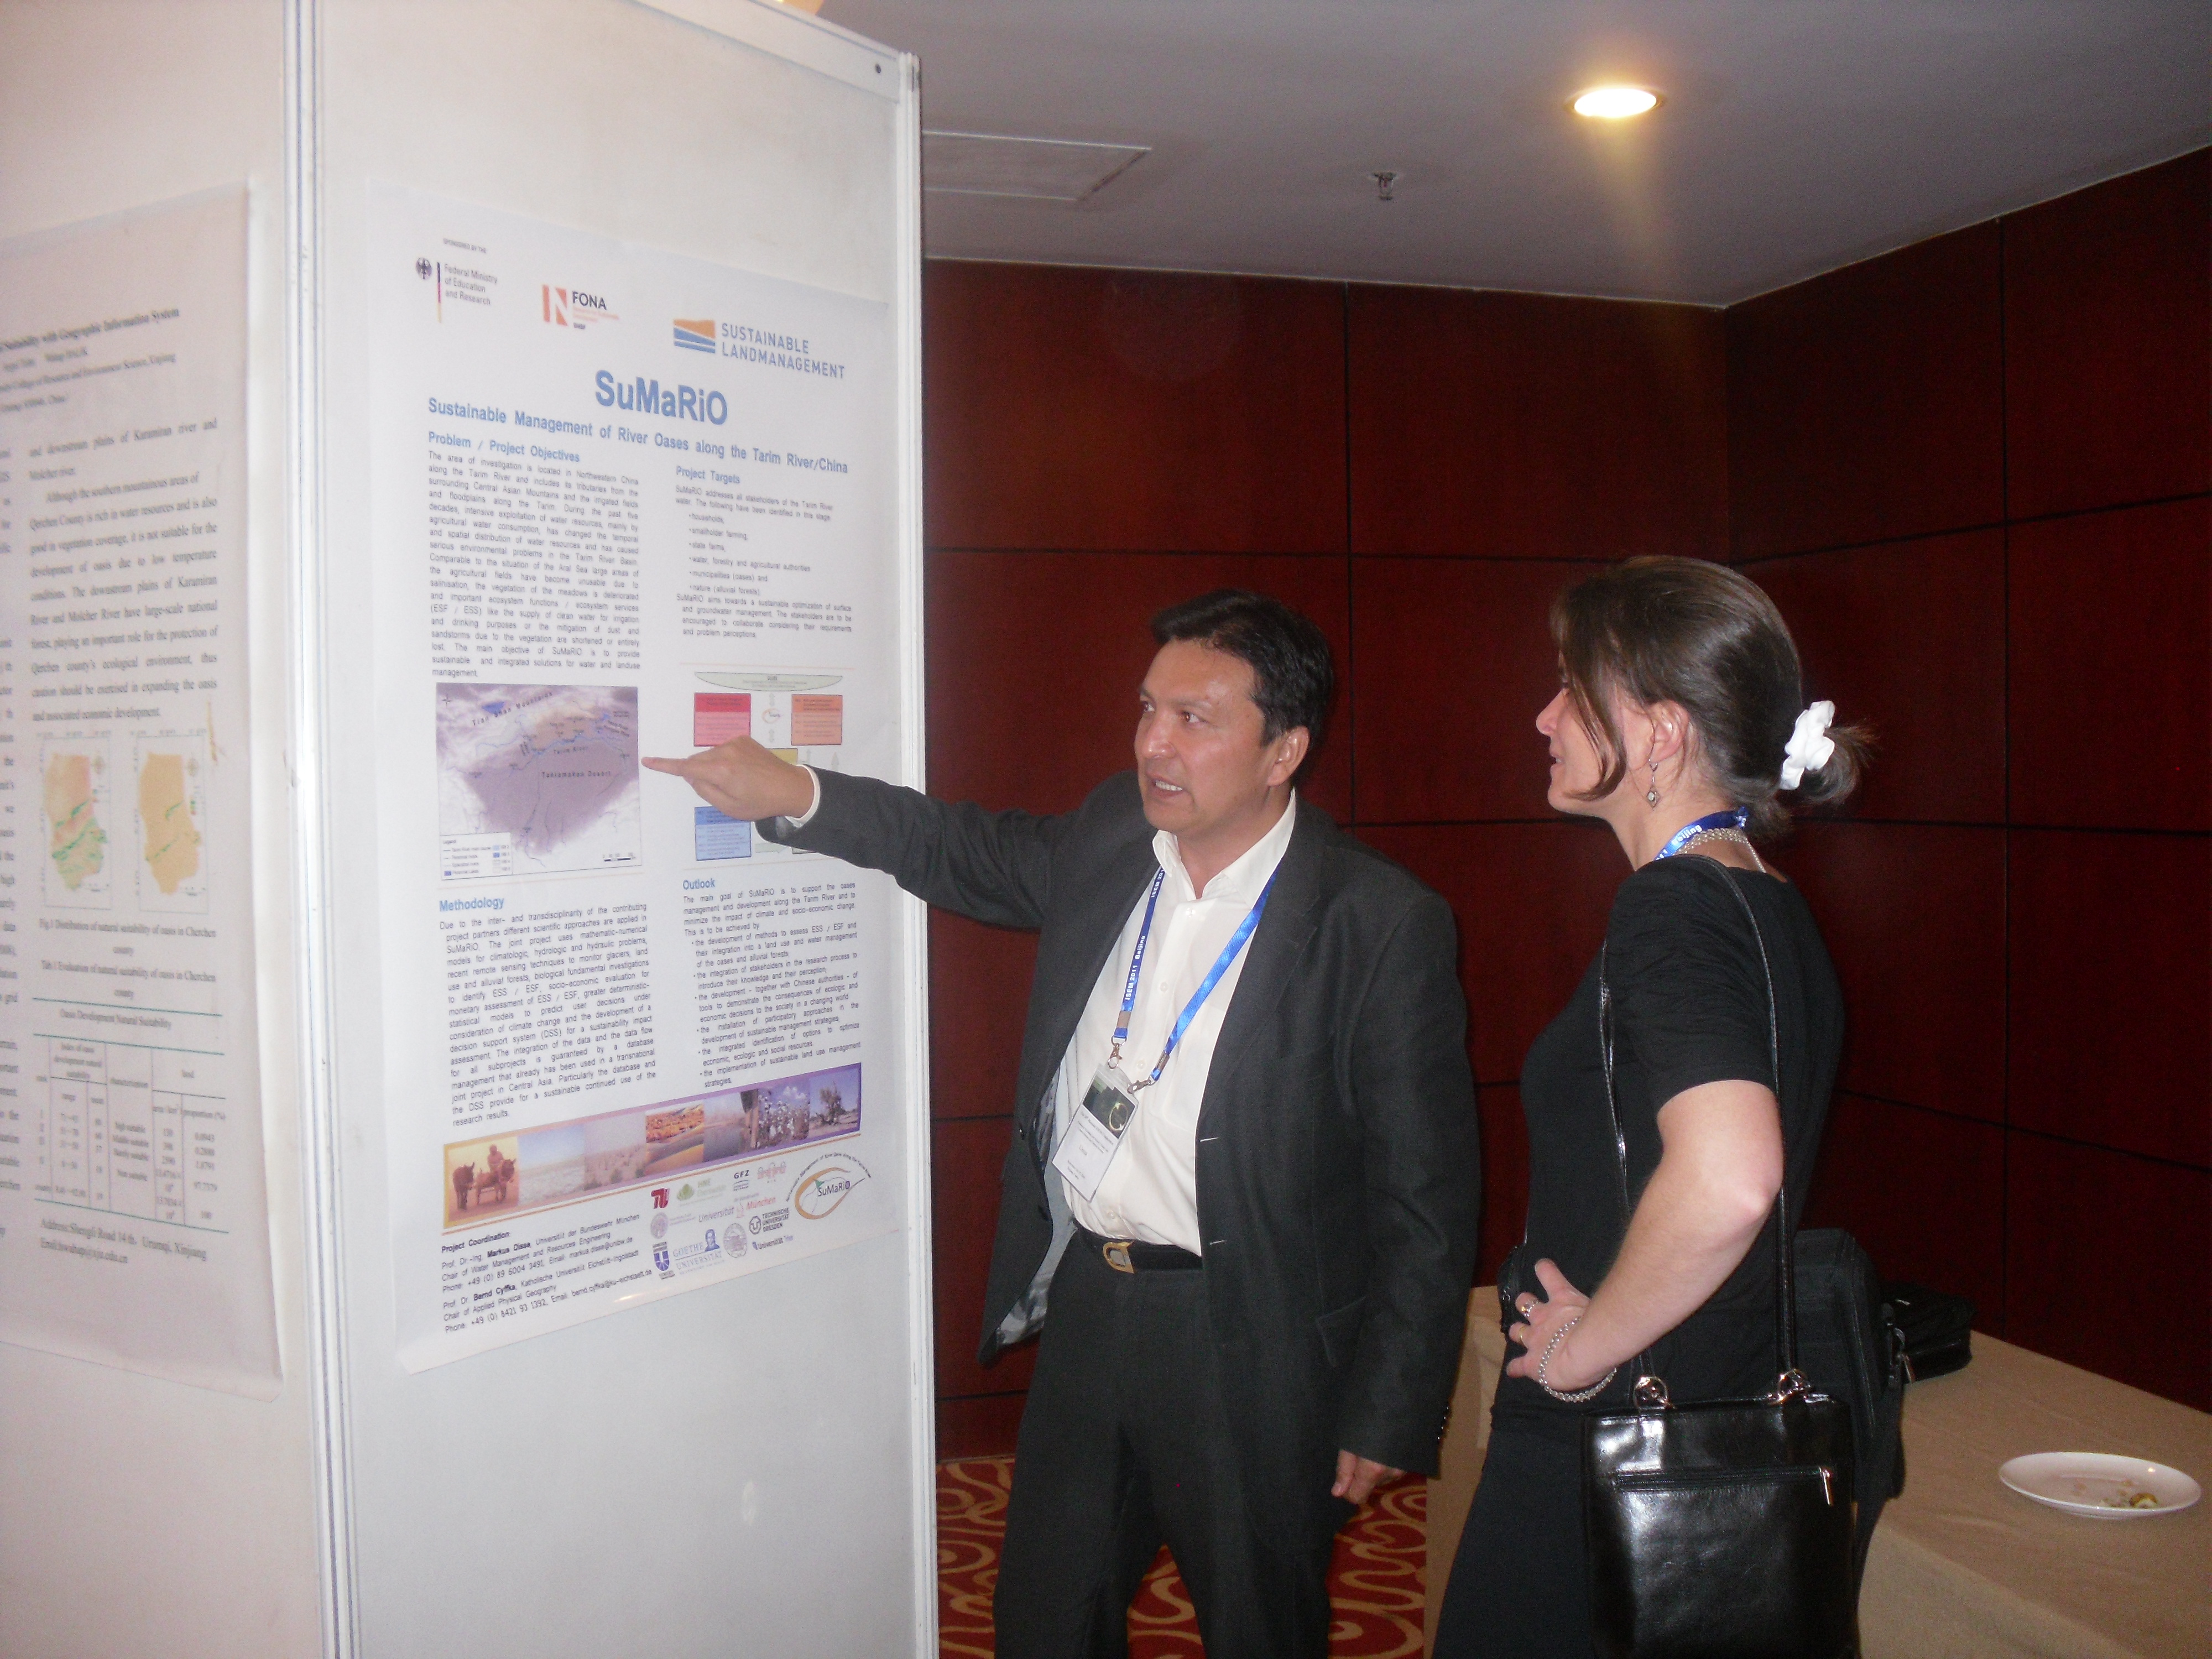 Prof. Ümüt Halik in front of the SuMaRiO Poster presentation